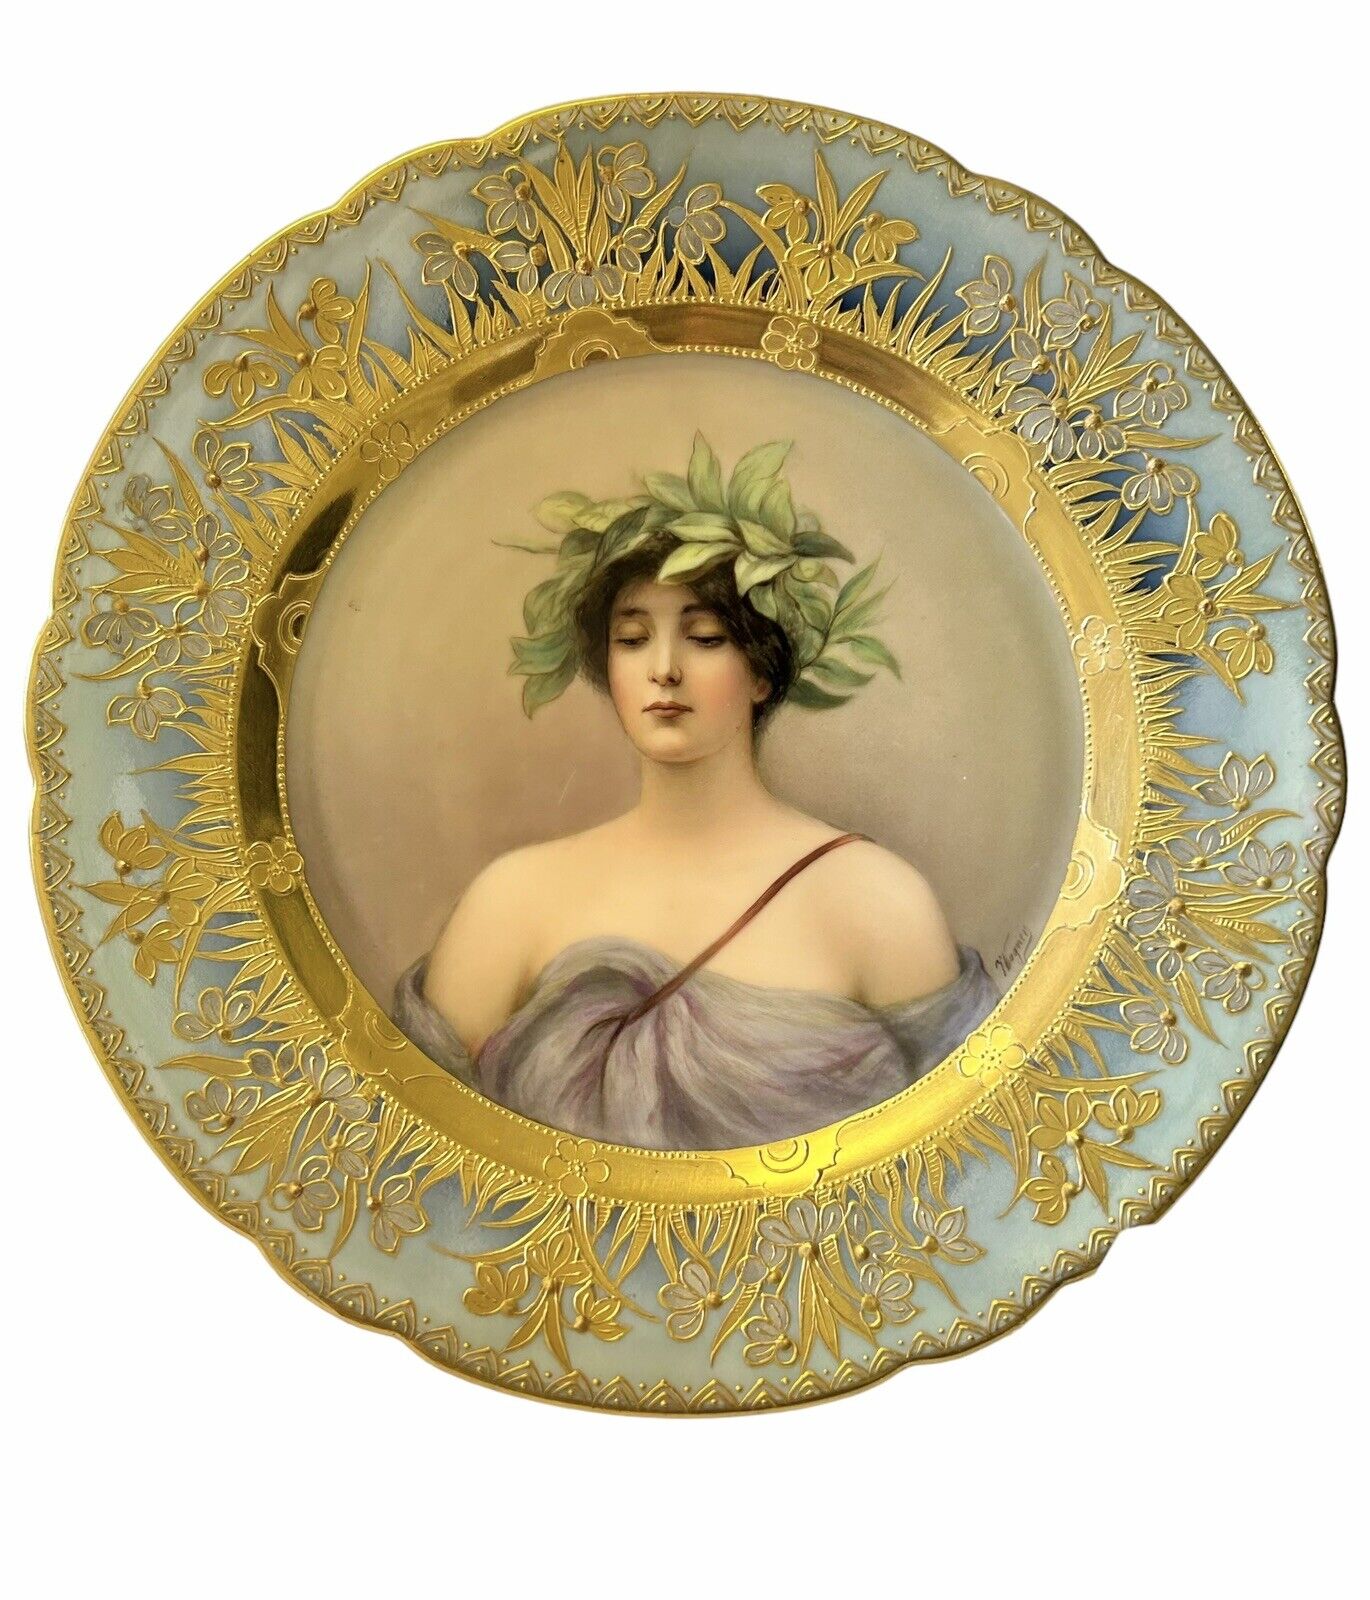 19c Royal Vienna Porcelain Antique Plate Signed Wagner